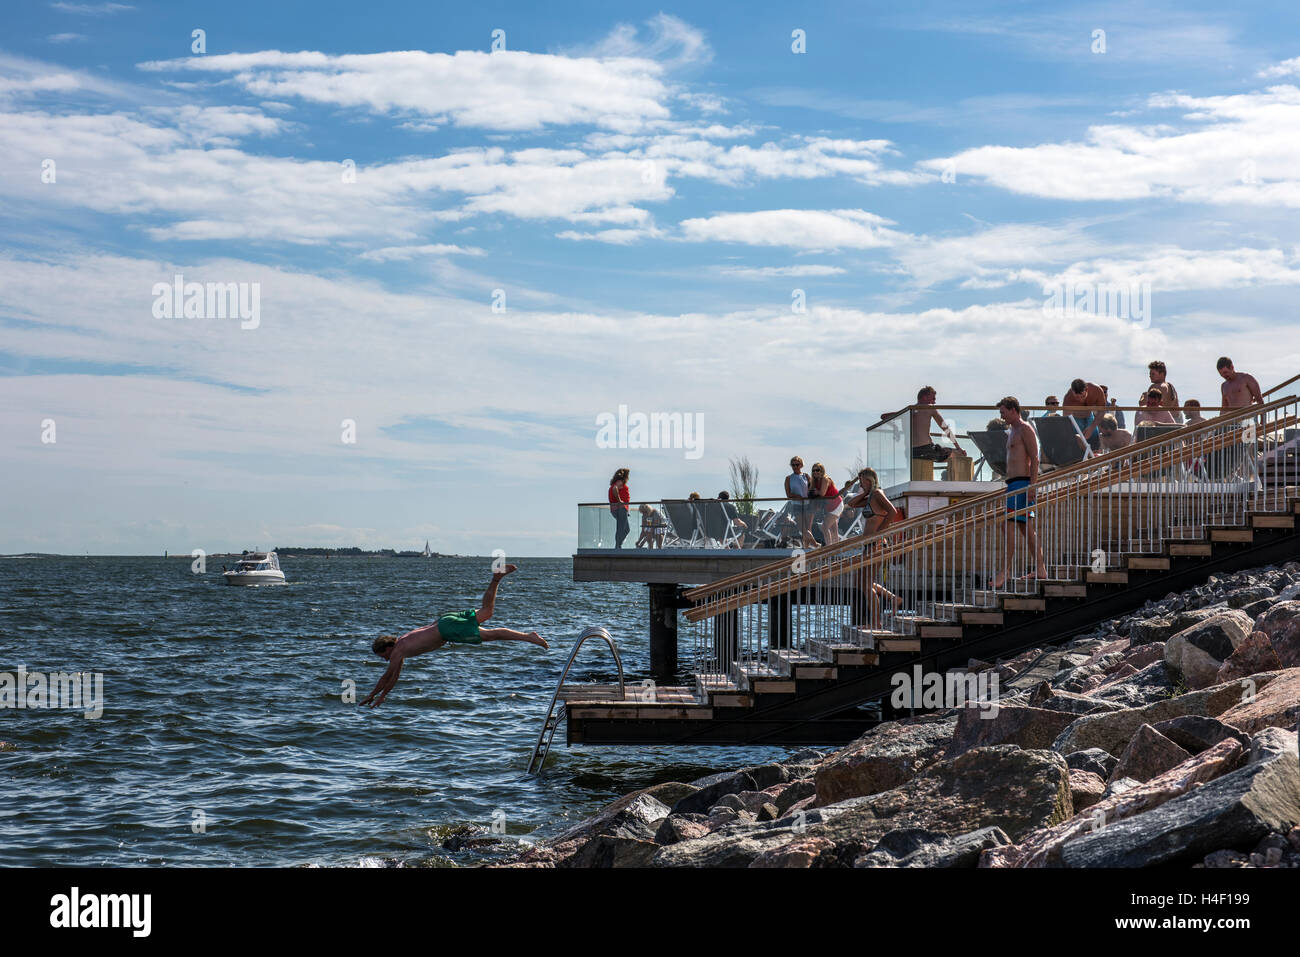 People jumping in the water from Lšyly public waterfront sauna, Hernesaari, Helsinki, Finland Stock Photo